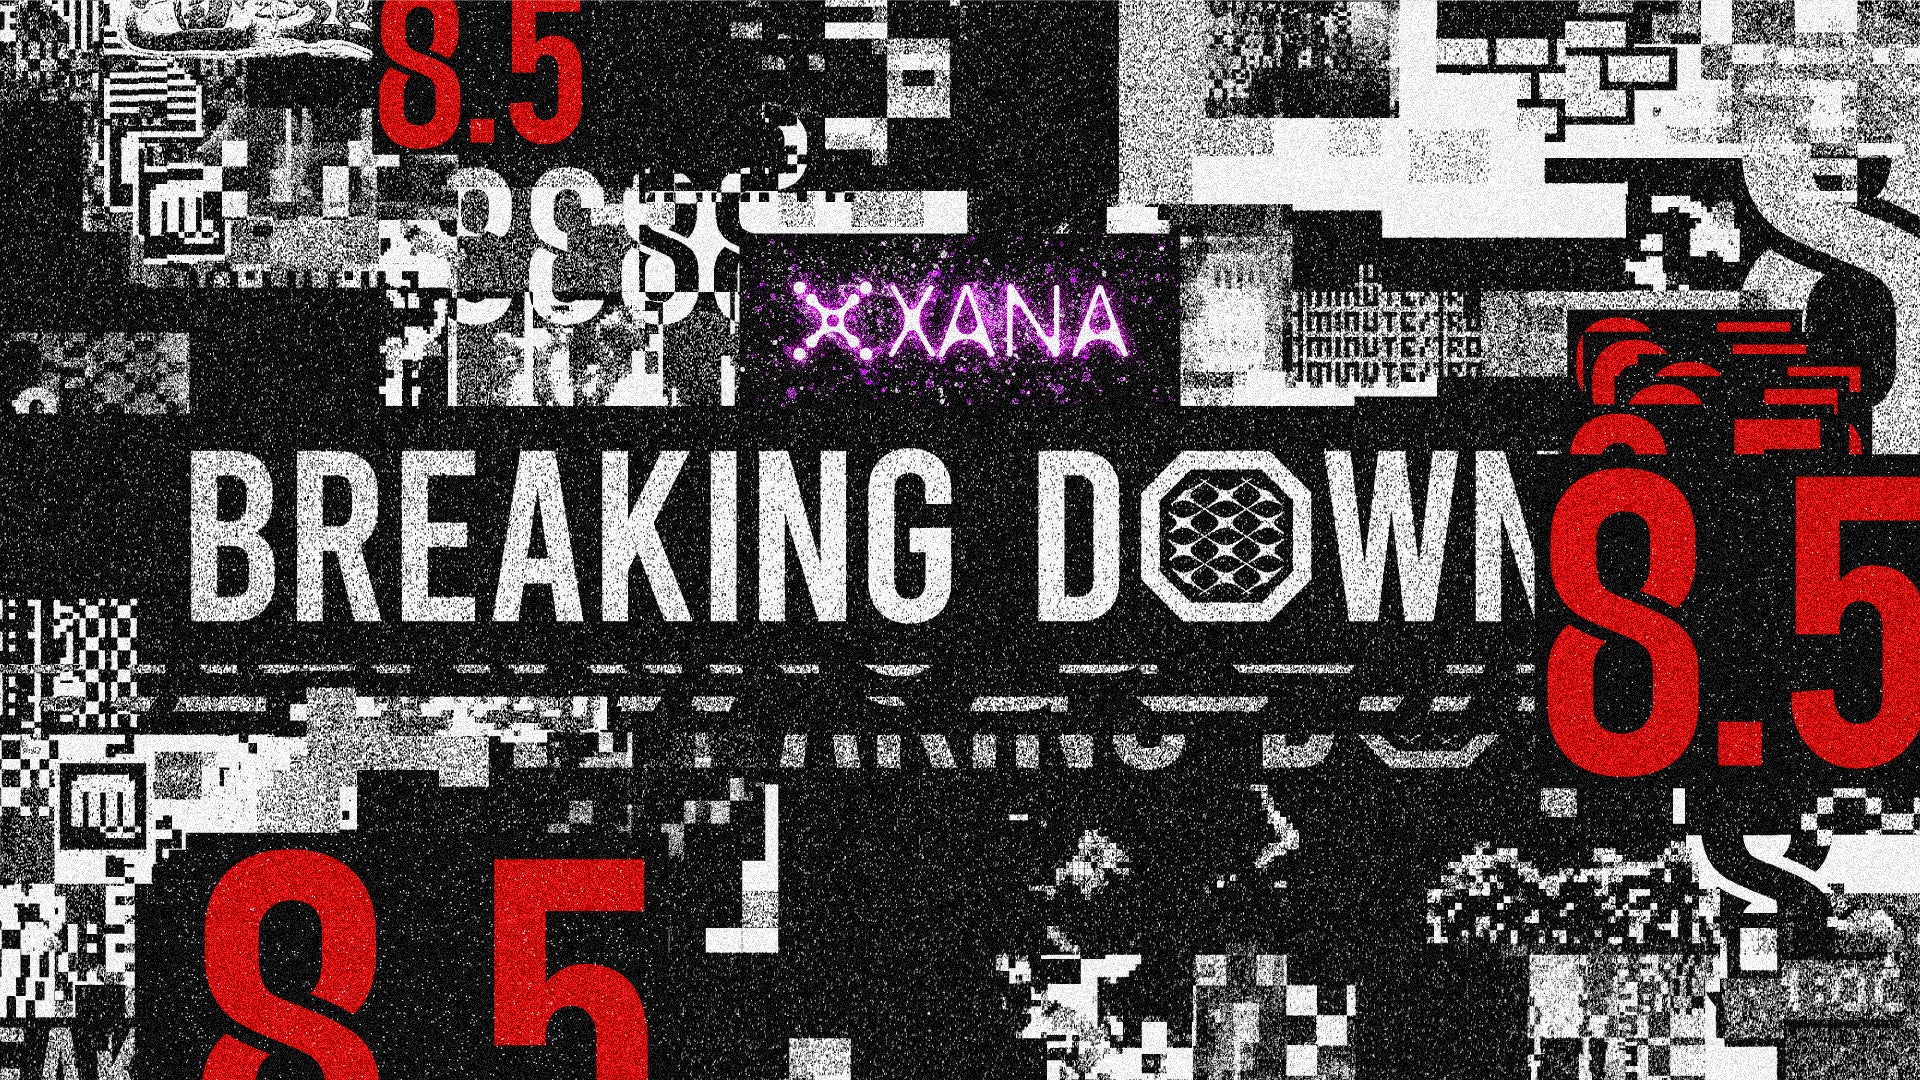 Web3.0型メタバース「XANA」をメインスポンサーに『BreakingDown8.5』が開催決定〜7月1日、朝倉未来YouTubeチャンネルで無料生配信〜